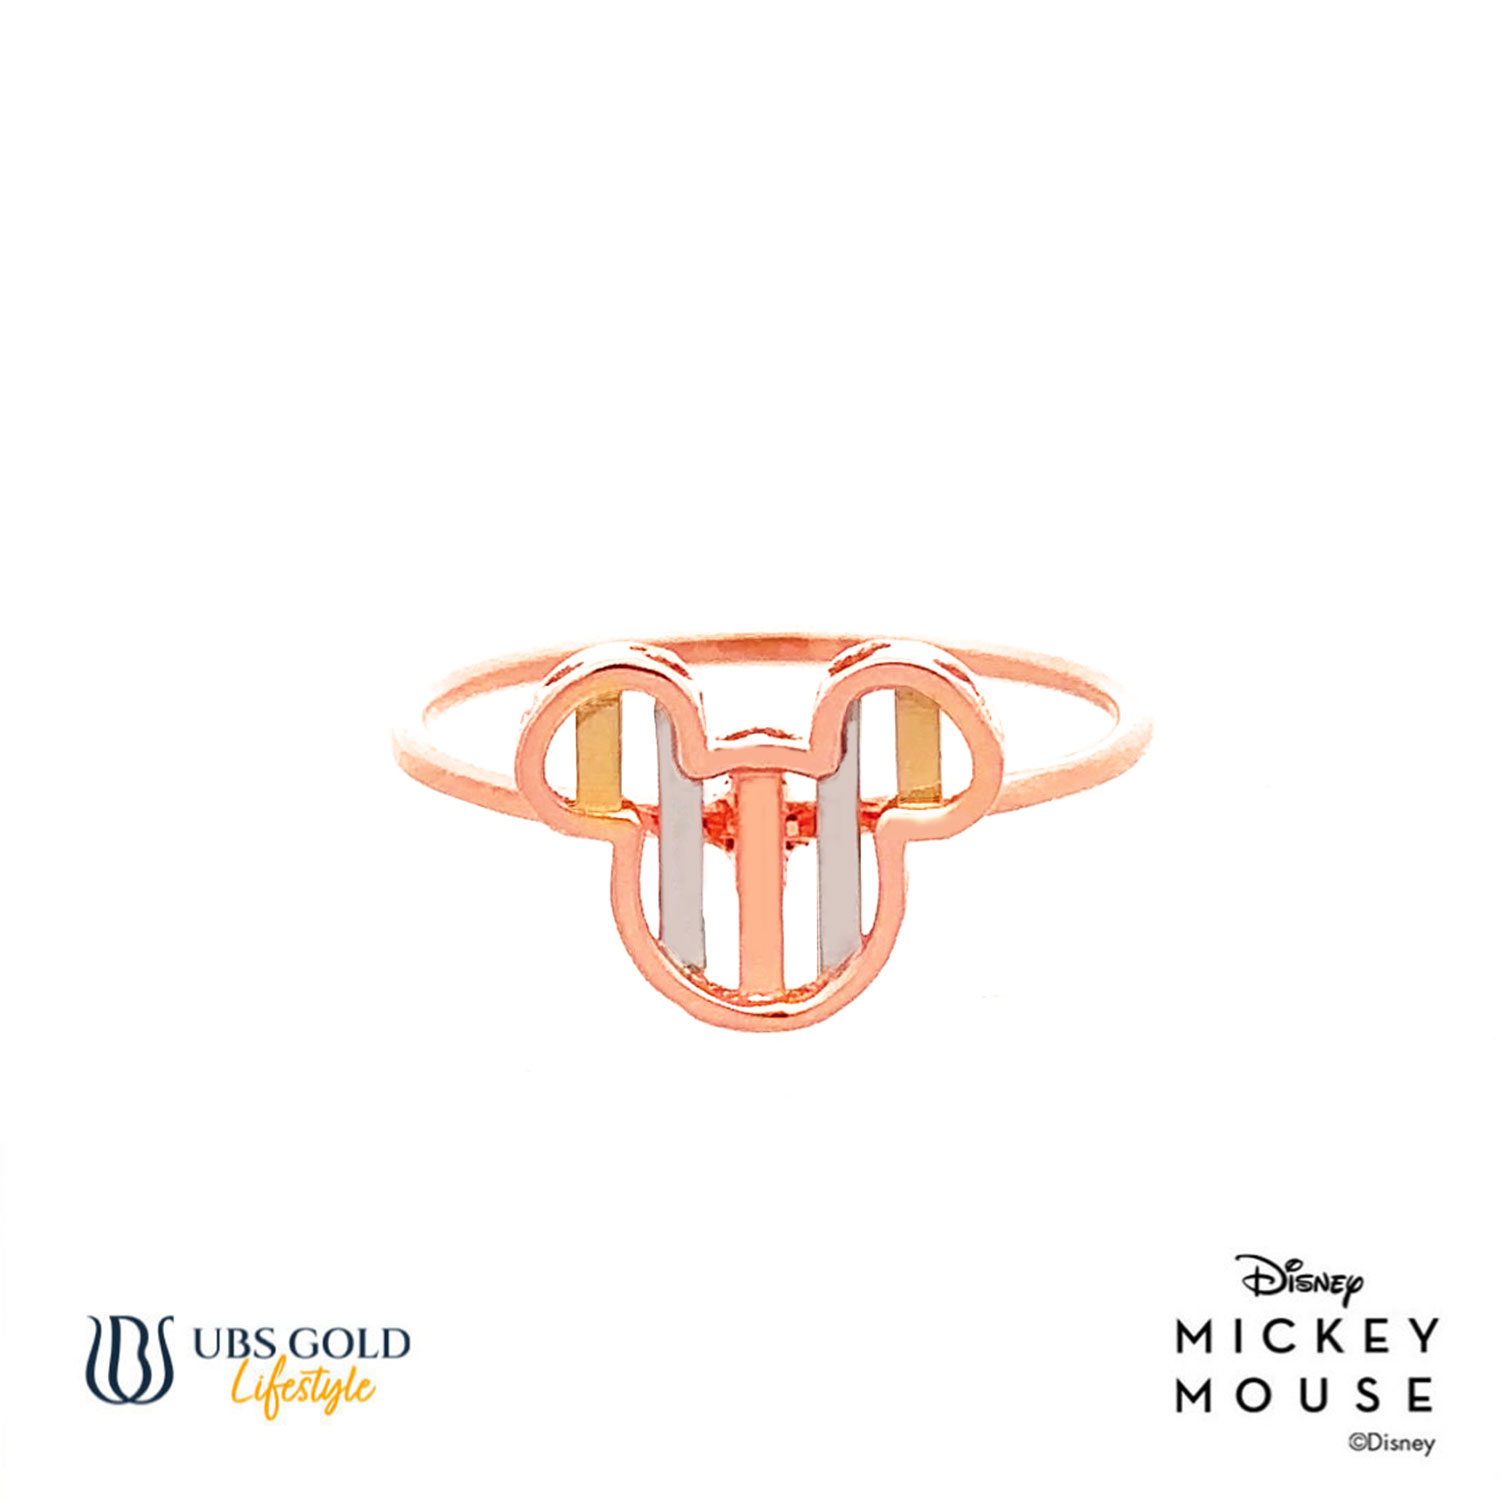 UBS Cincin Emas Disney Mickey Mouse - Ccy0190 - 17K